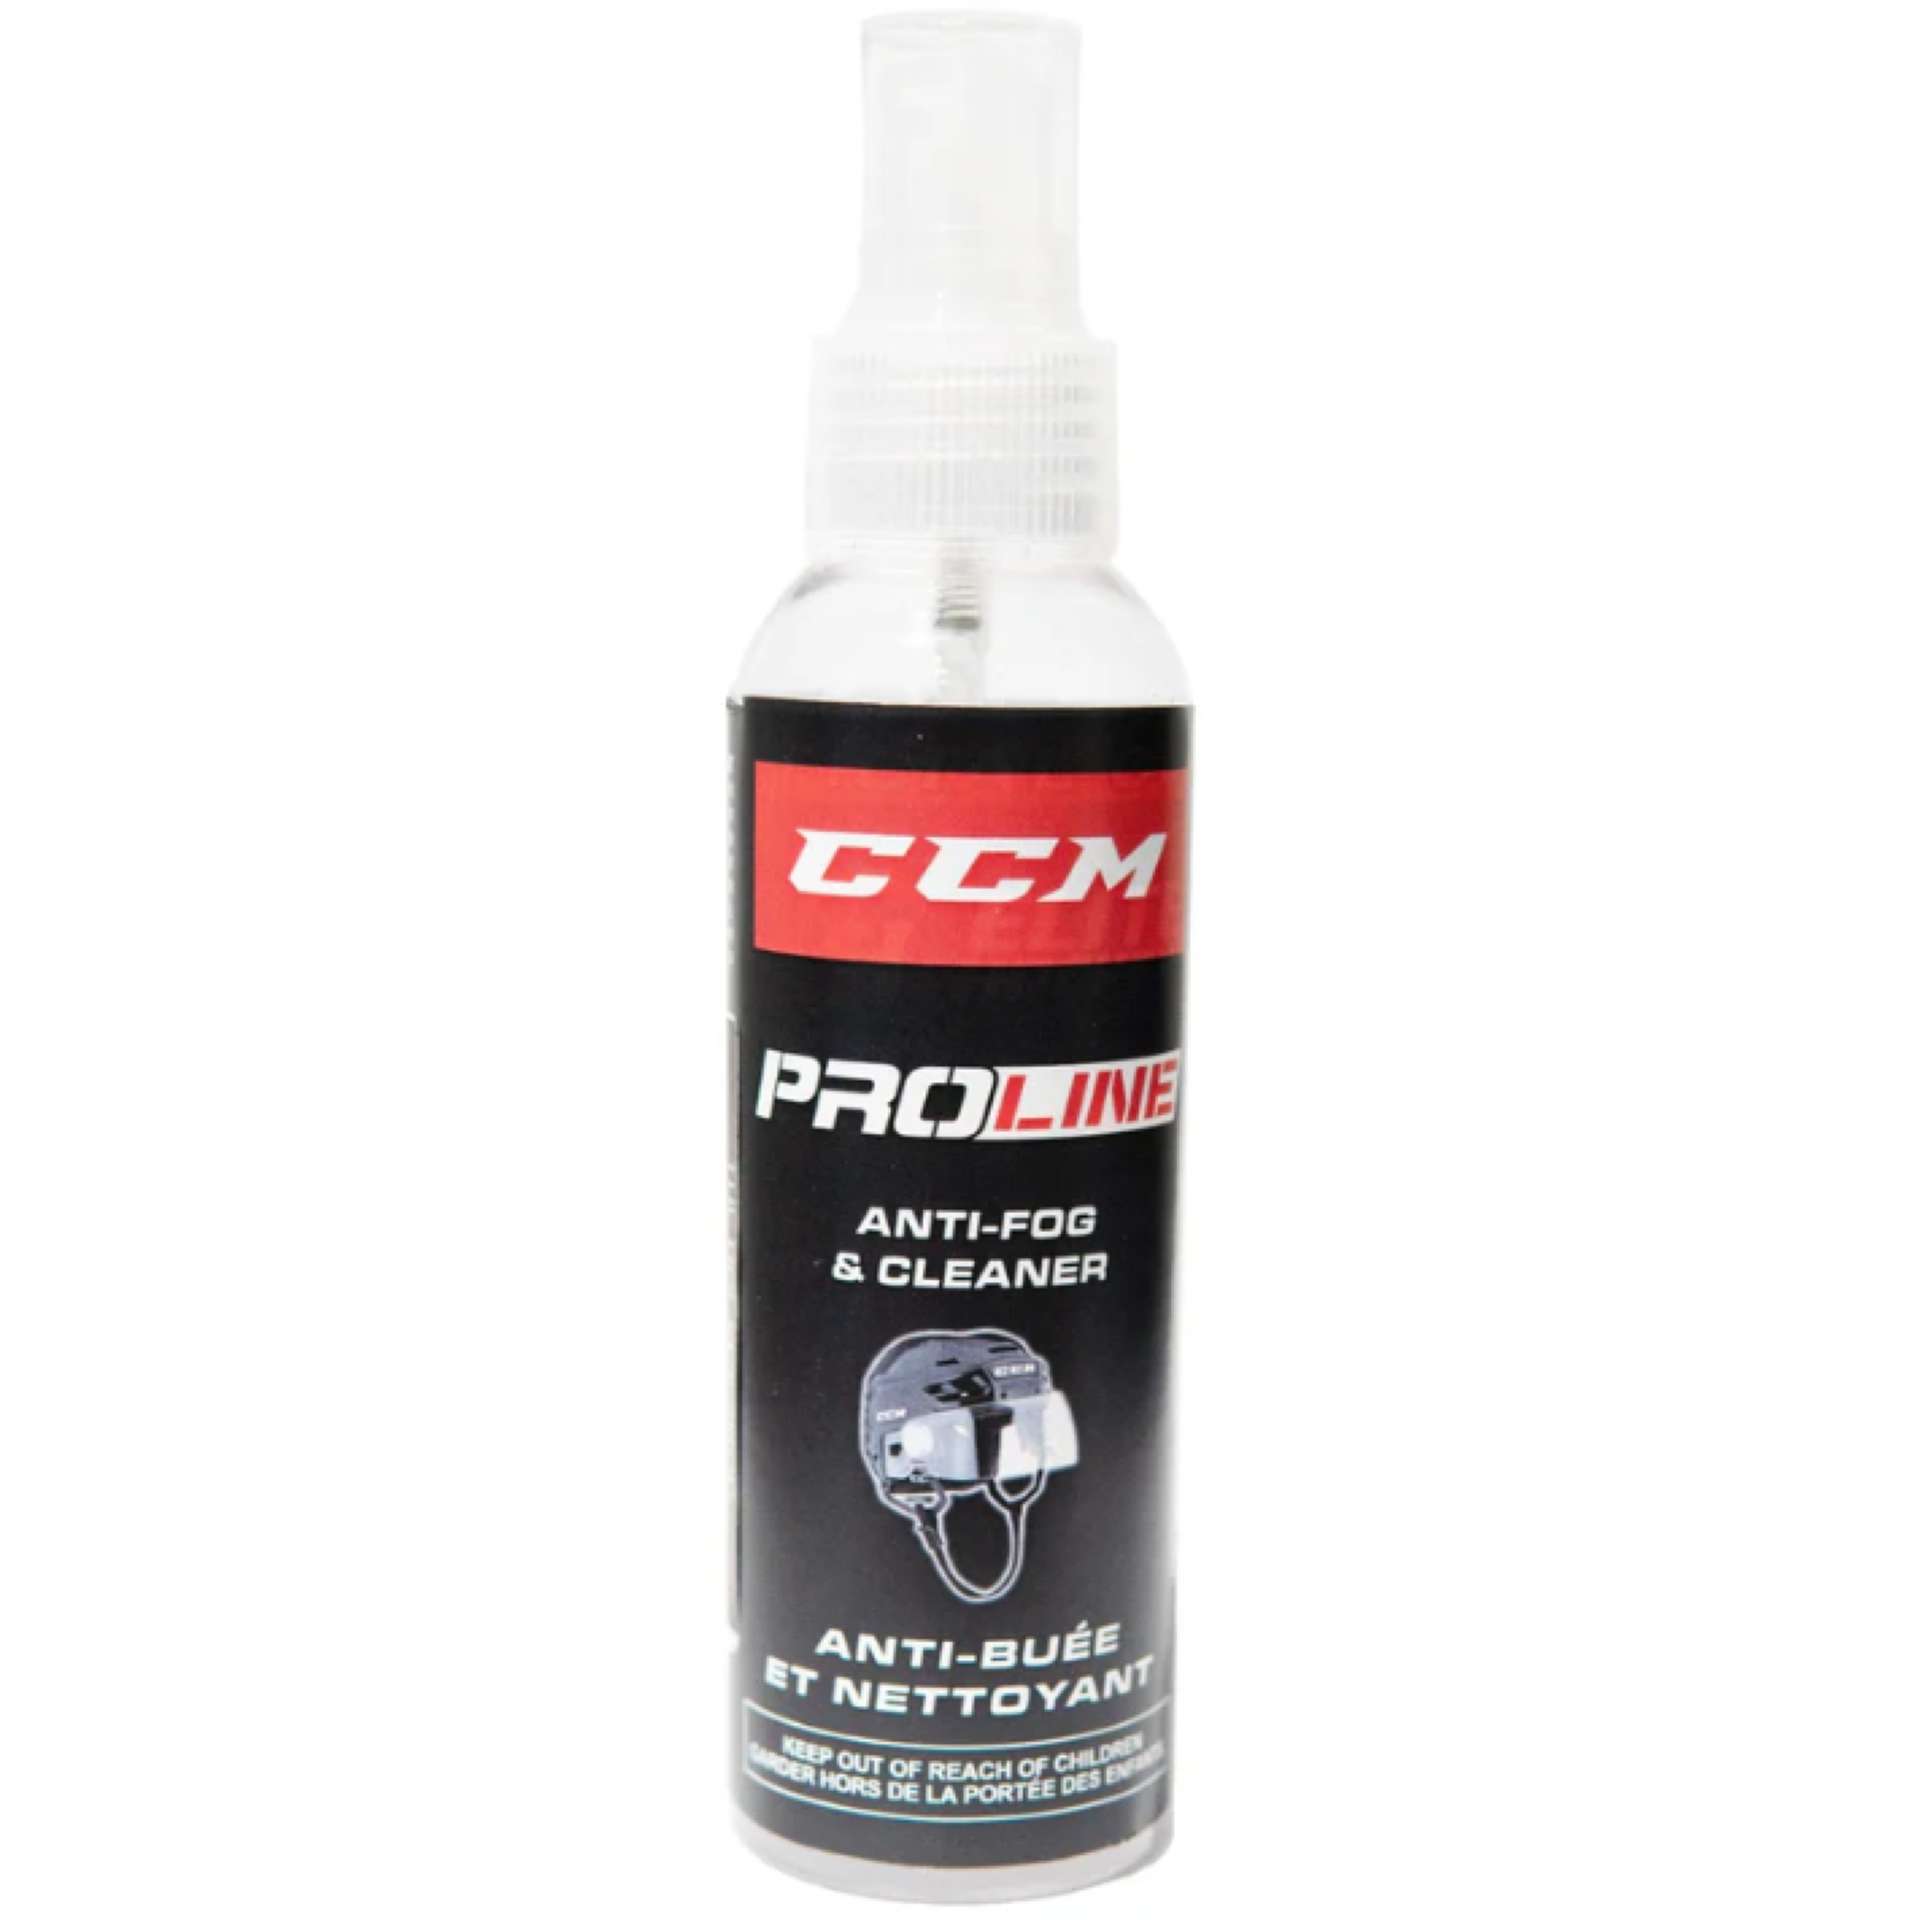 CCM Proline Visir Spray 120ml